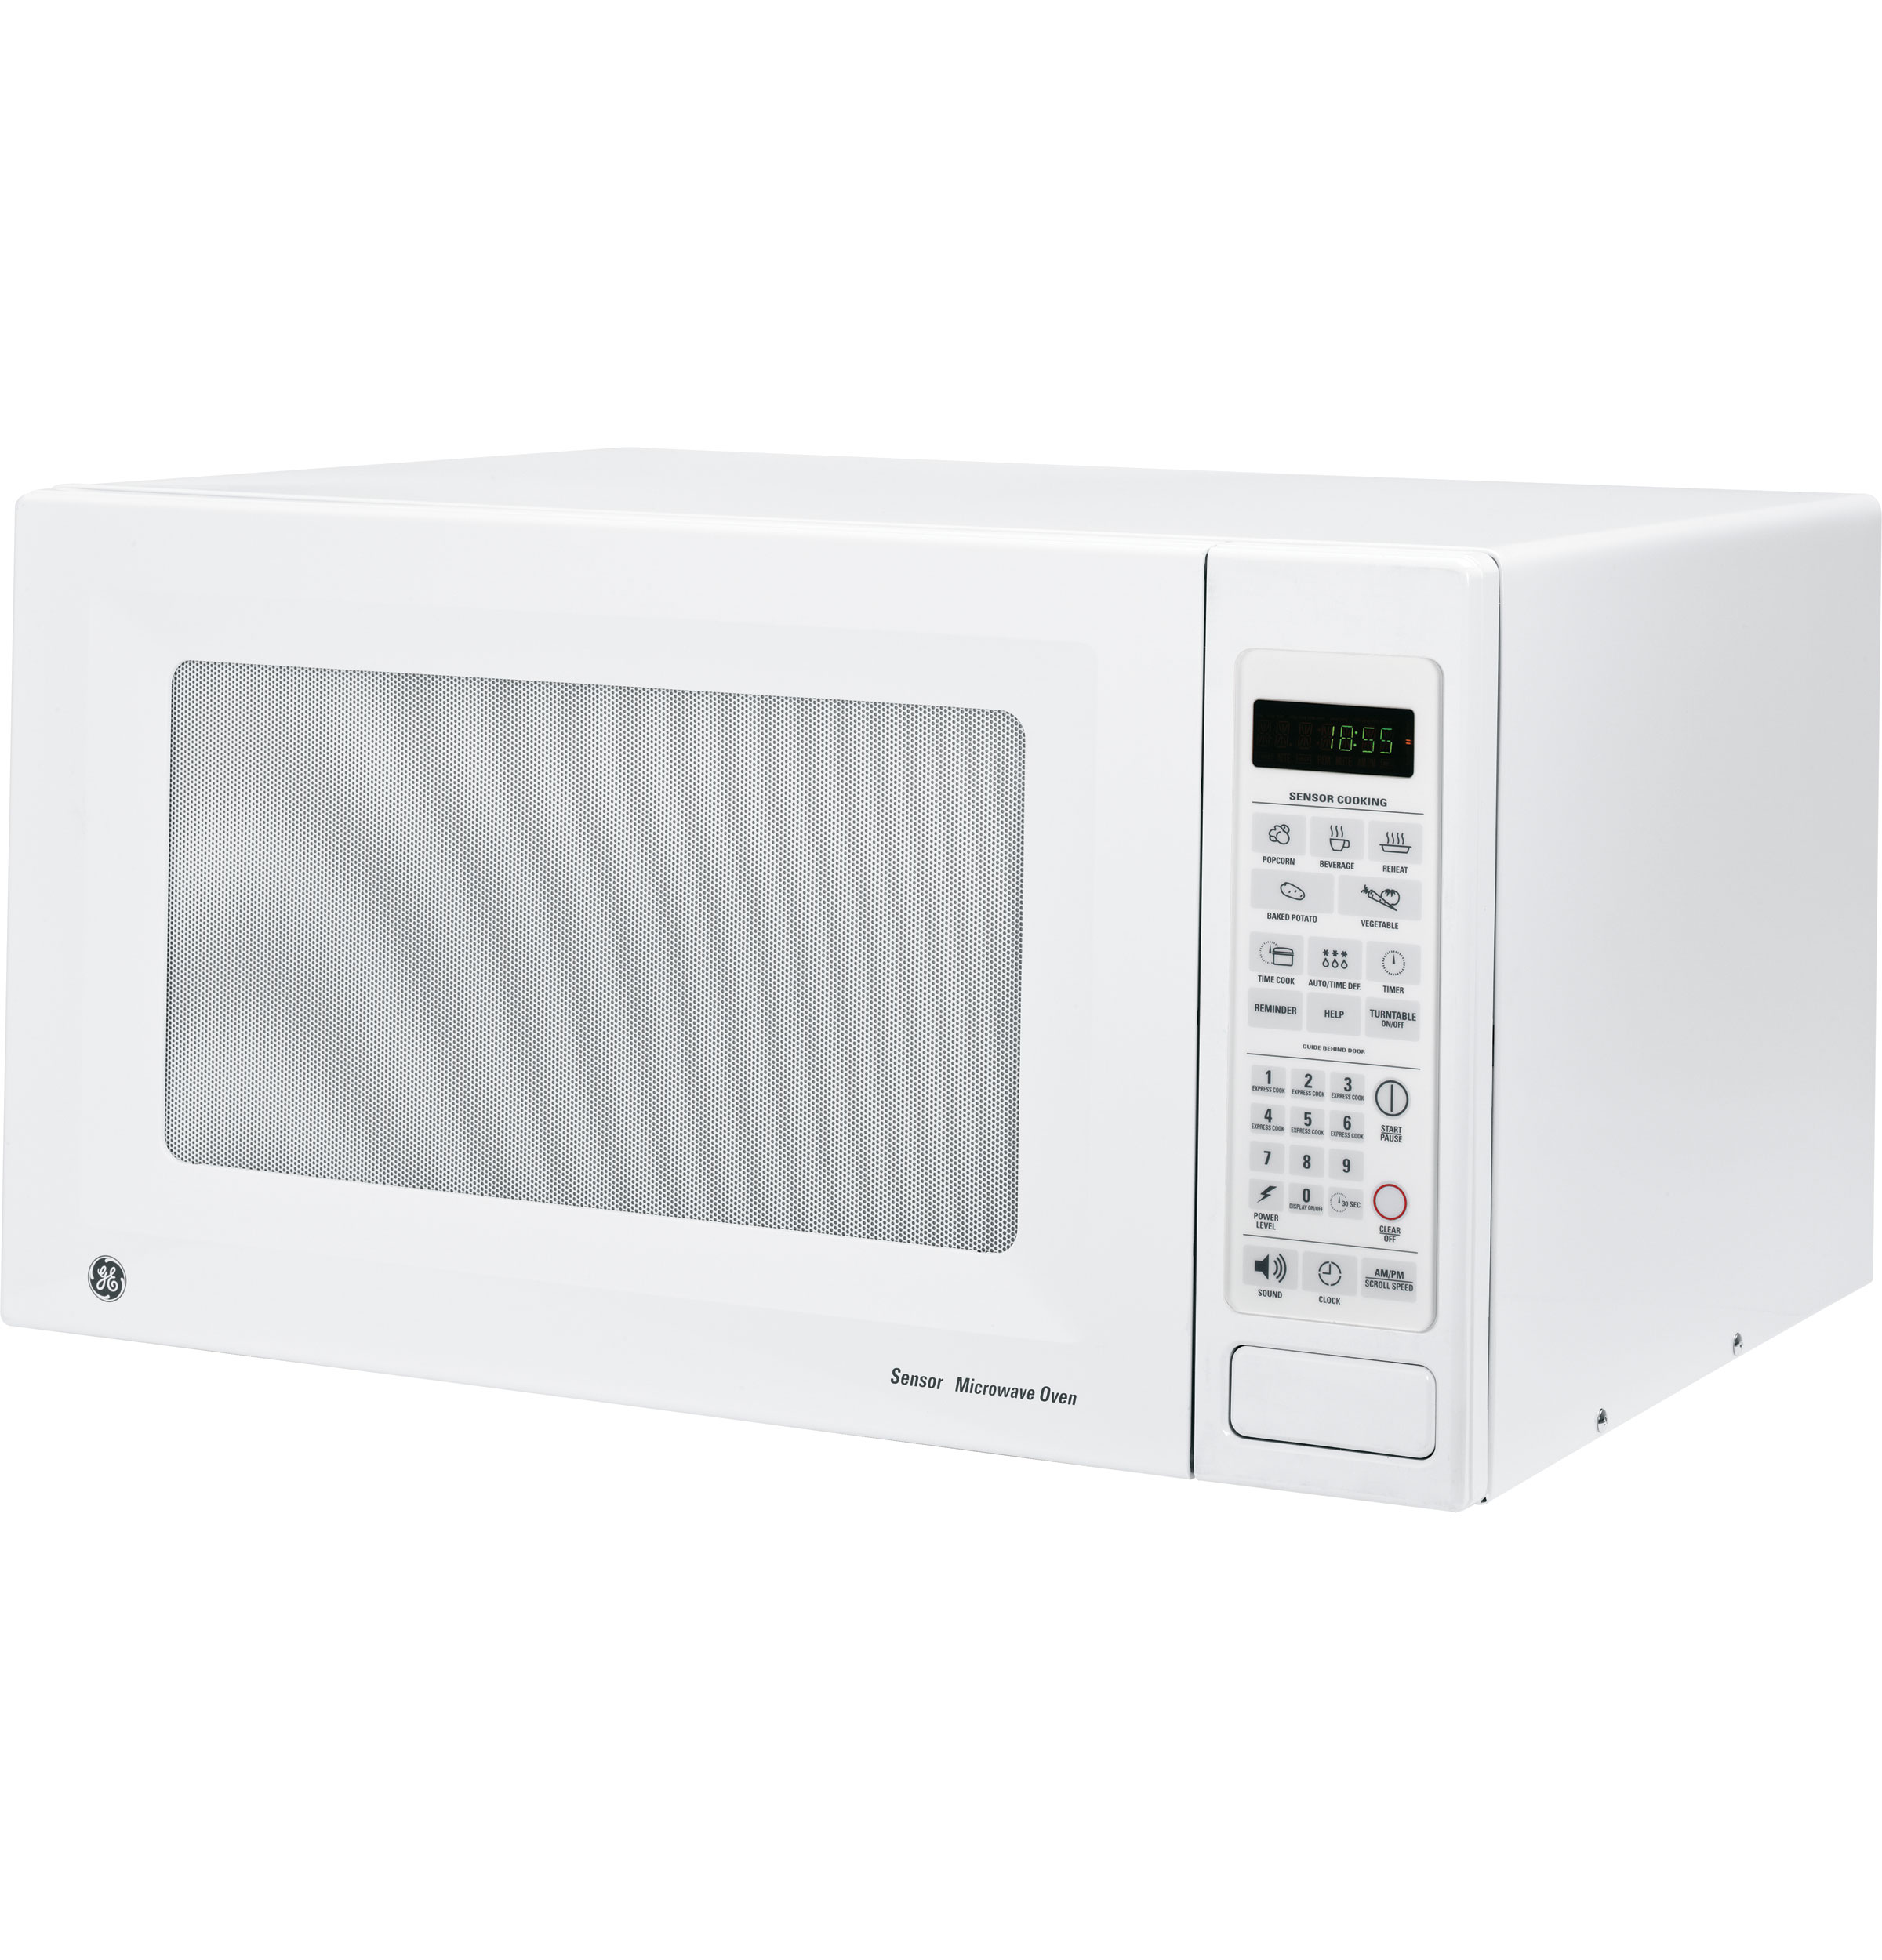 GE® 1.8 Cu. Ft. Capacity Countertop Microwave Oven